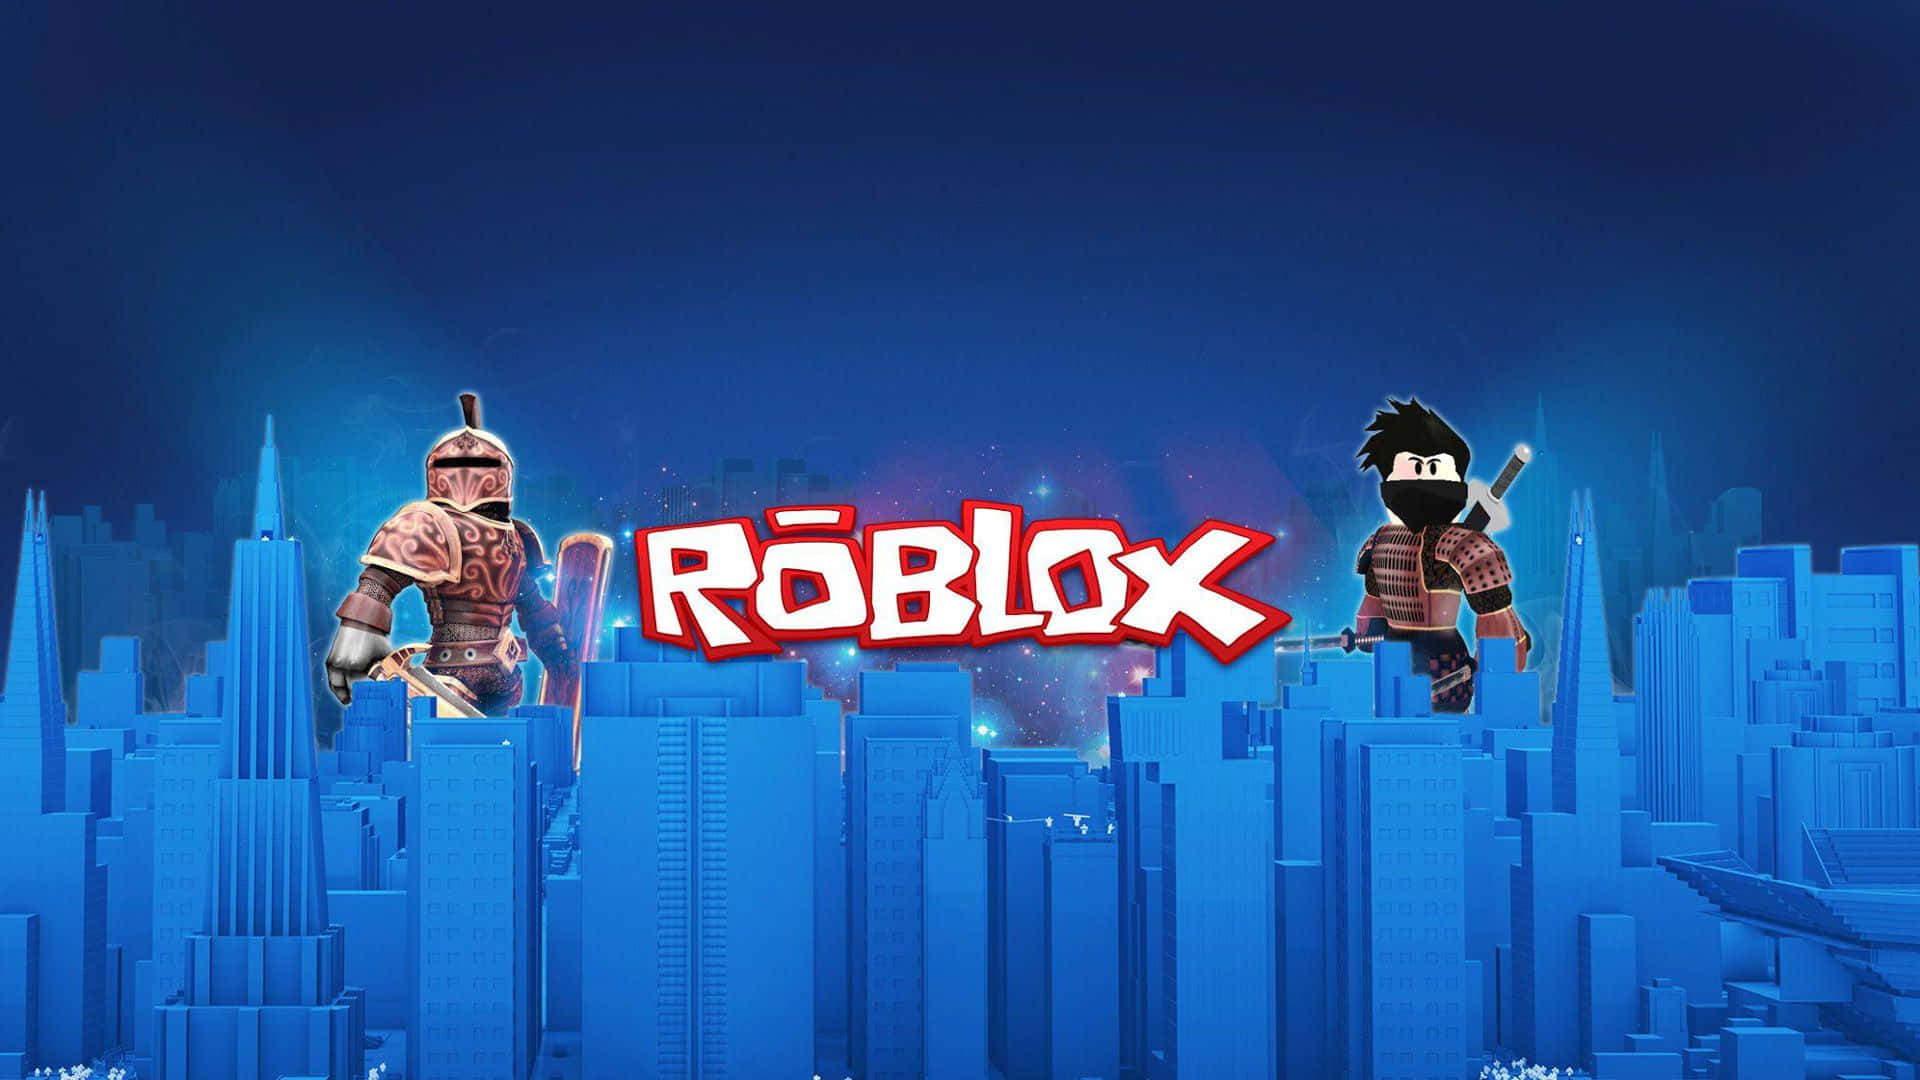 Loxroblox - Roblox - Roblox - Roblox - Roblox - Roblox - Roblox Wallpaper